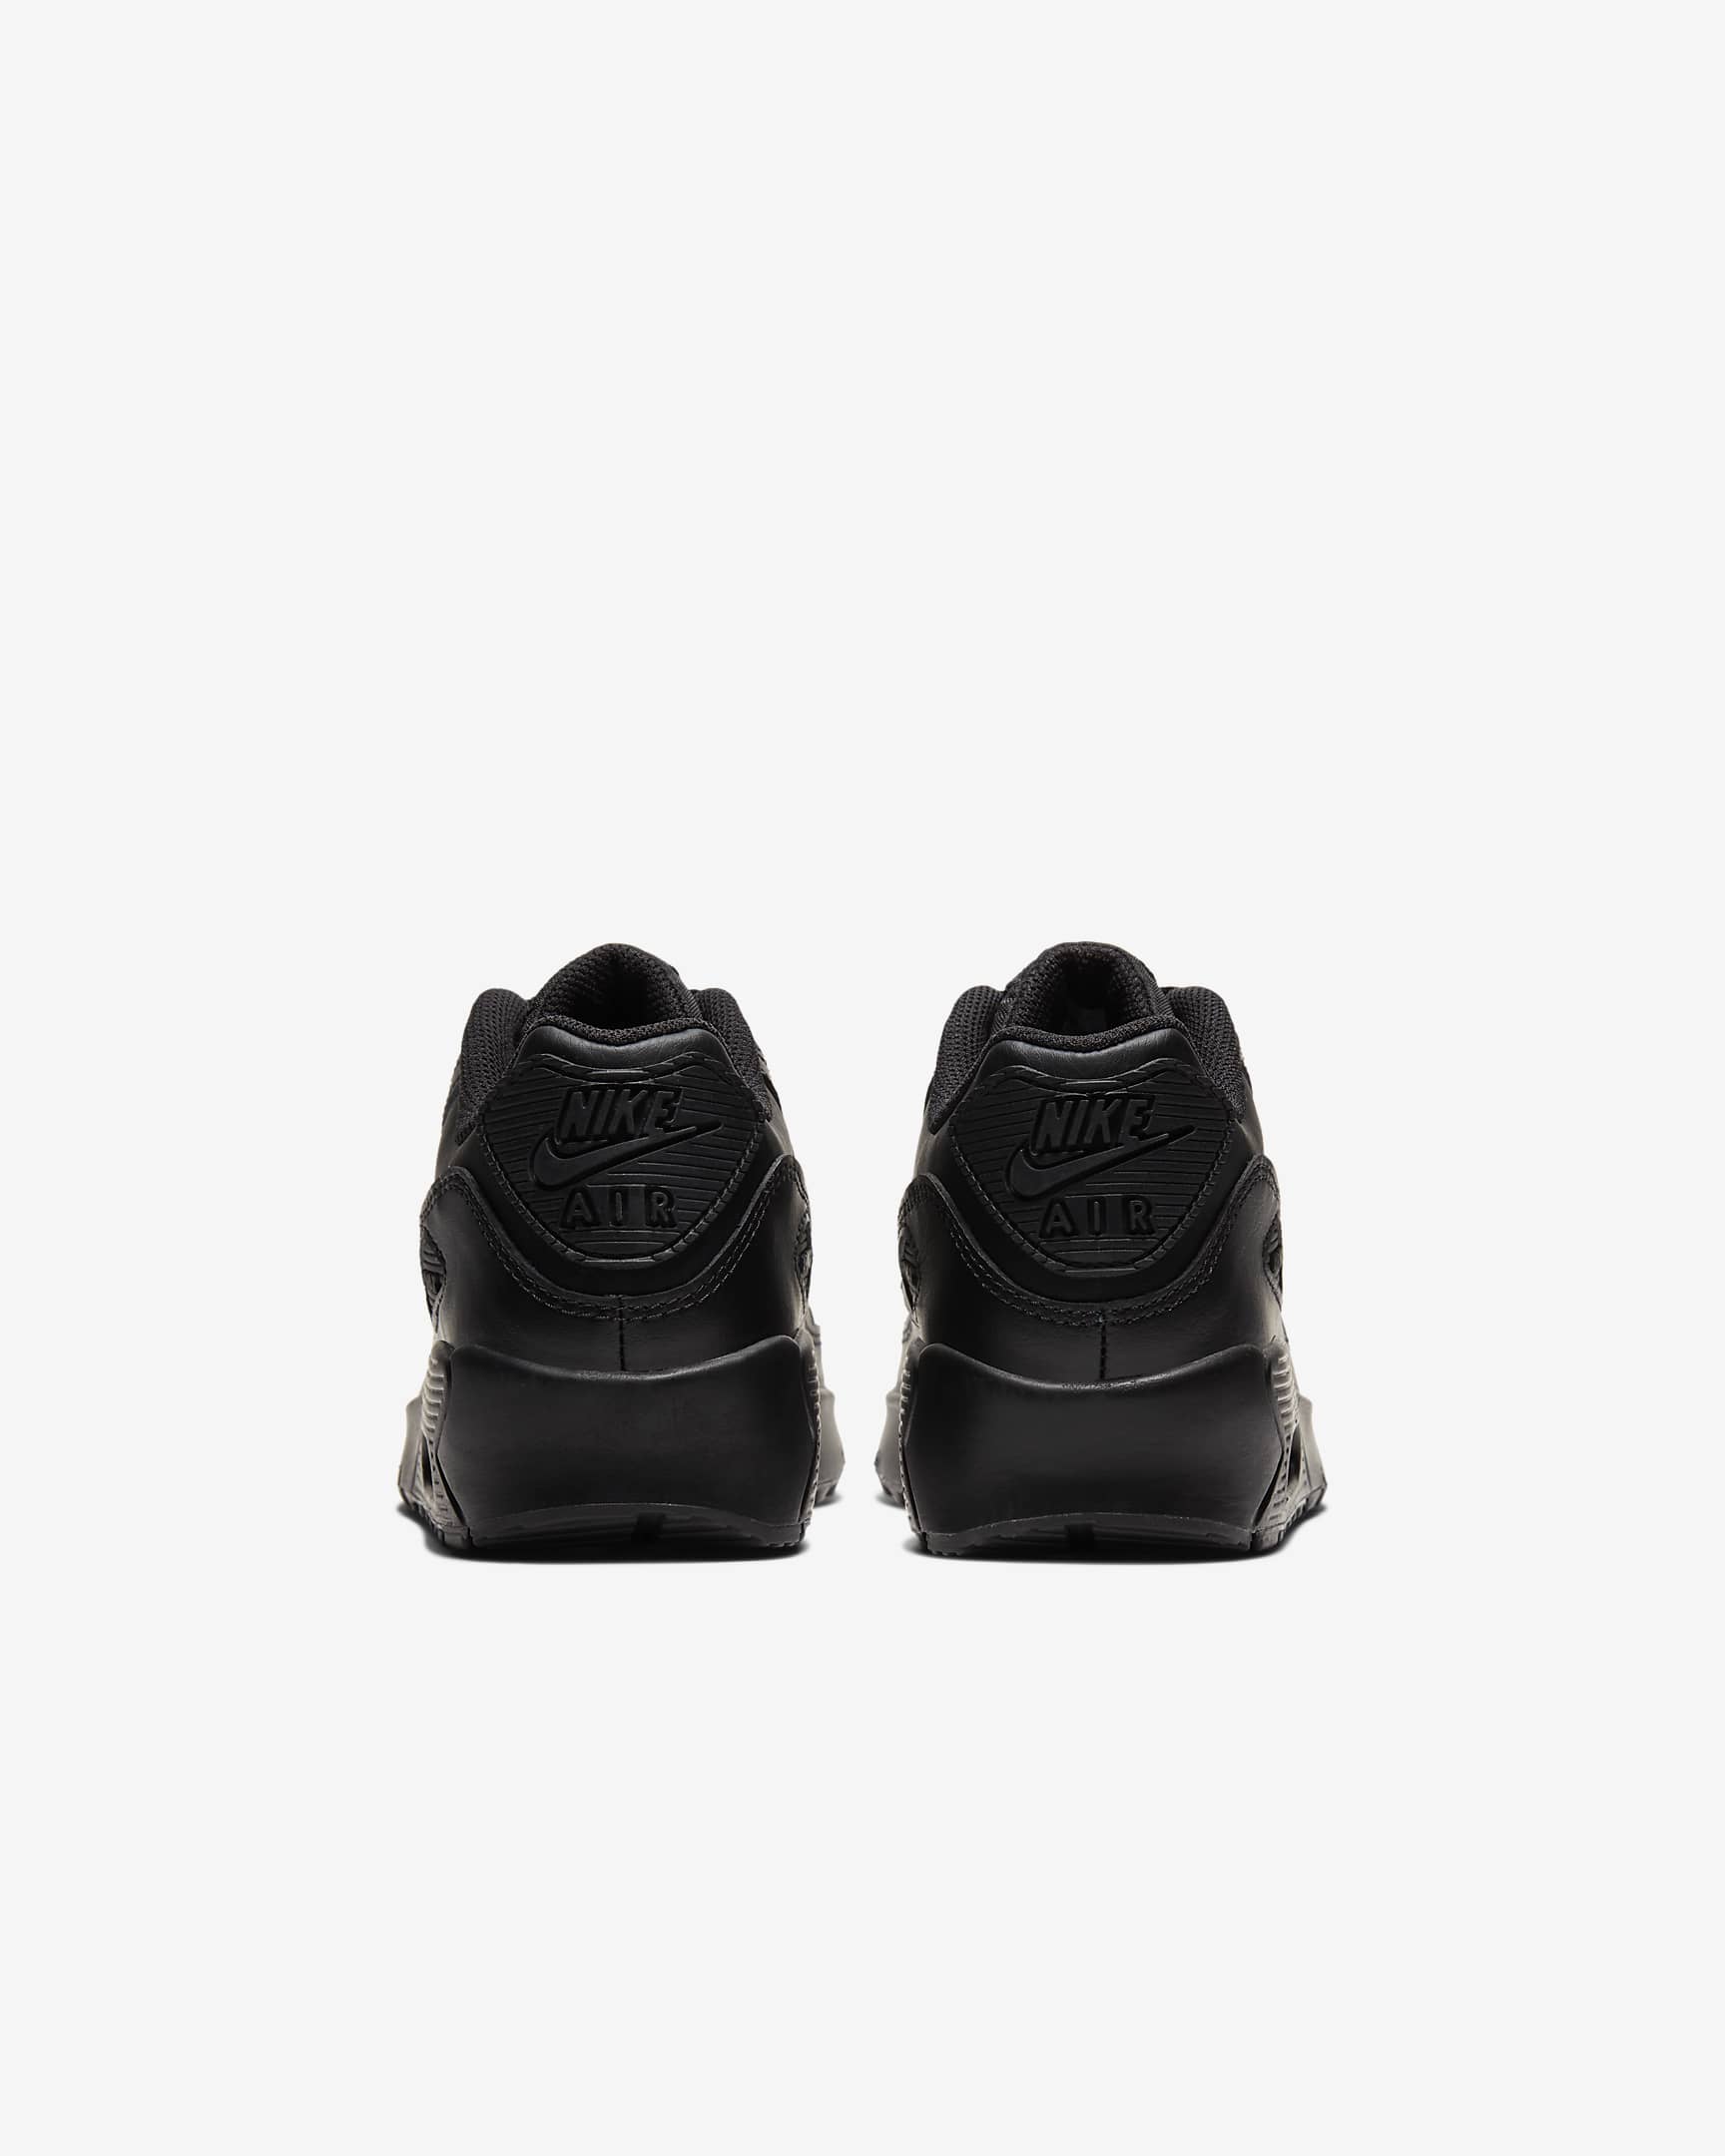 Nike Air Max 90 LTR Older Kids' Shoes - Black/Black/White/Black